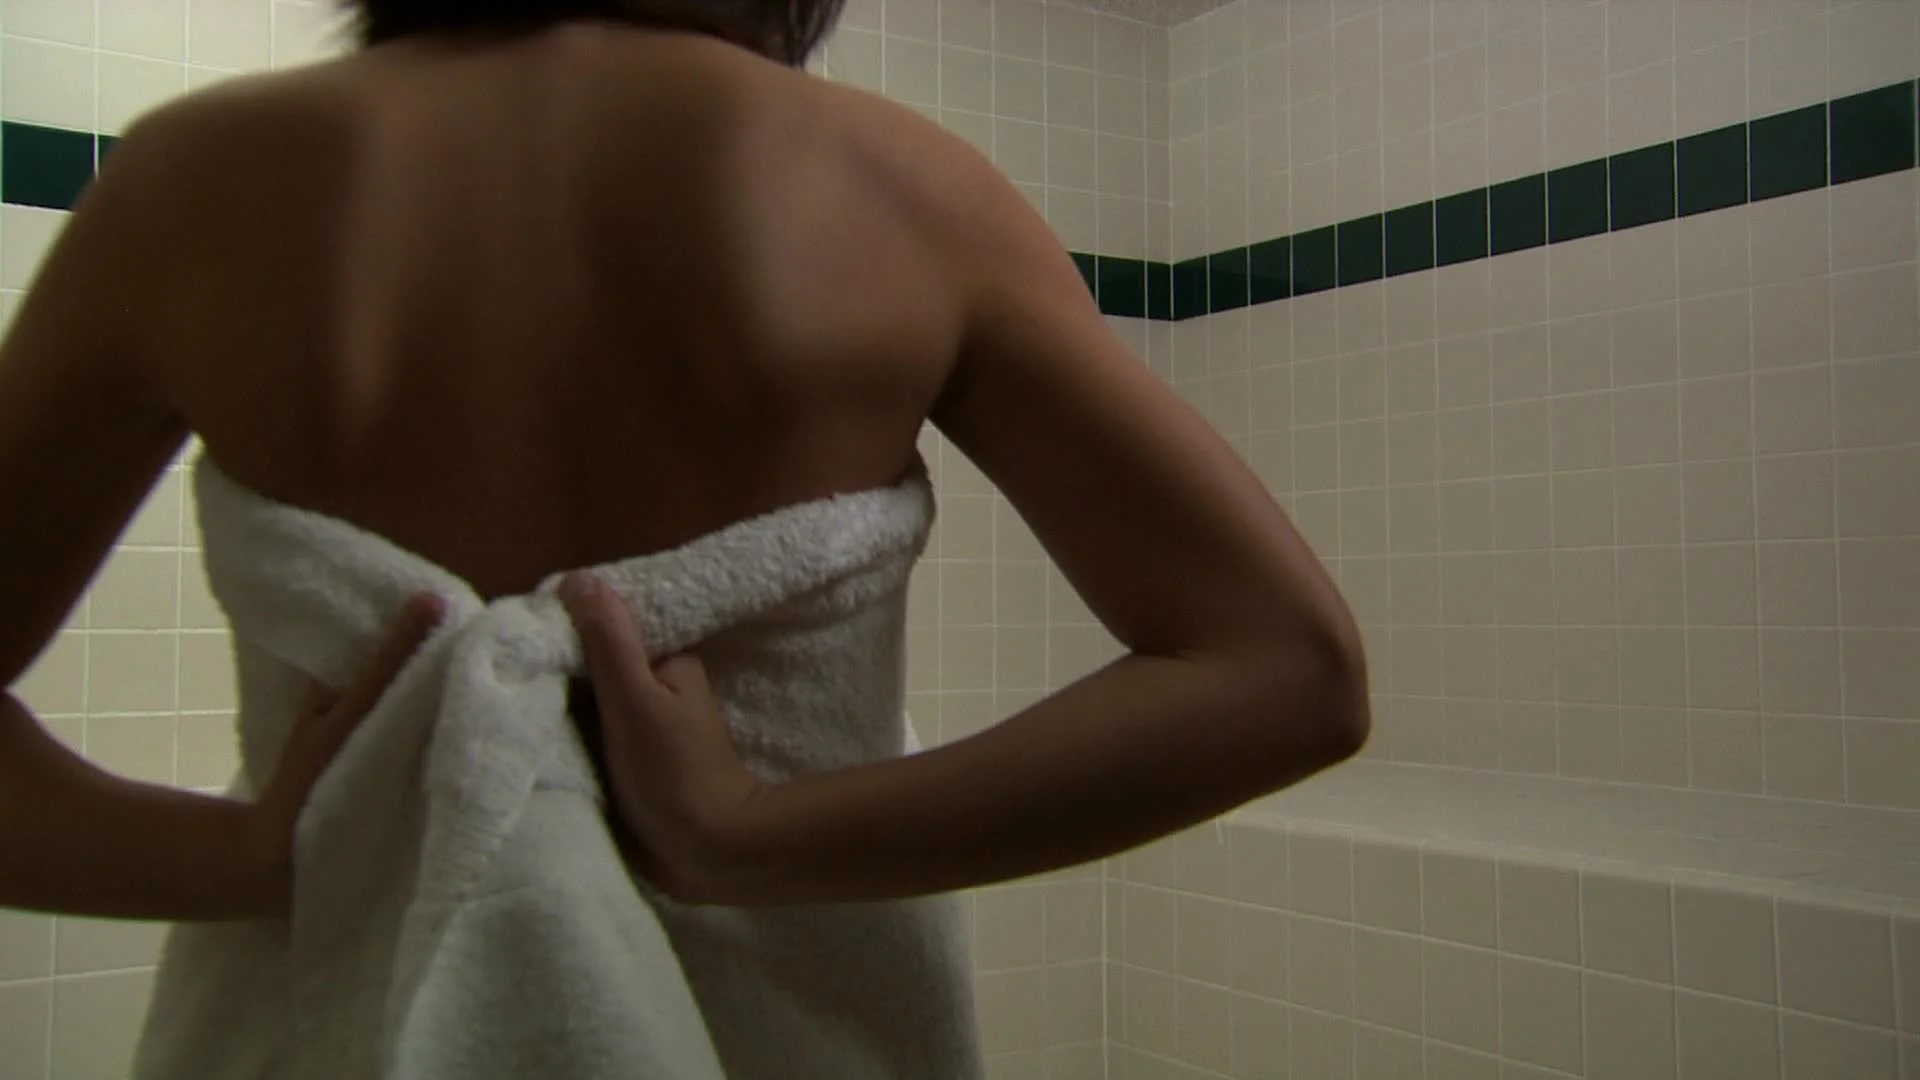 Girl removing towel